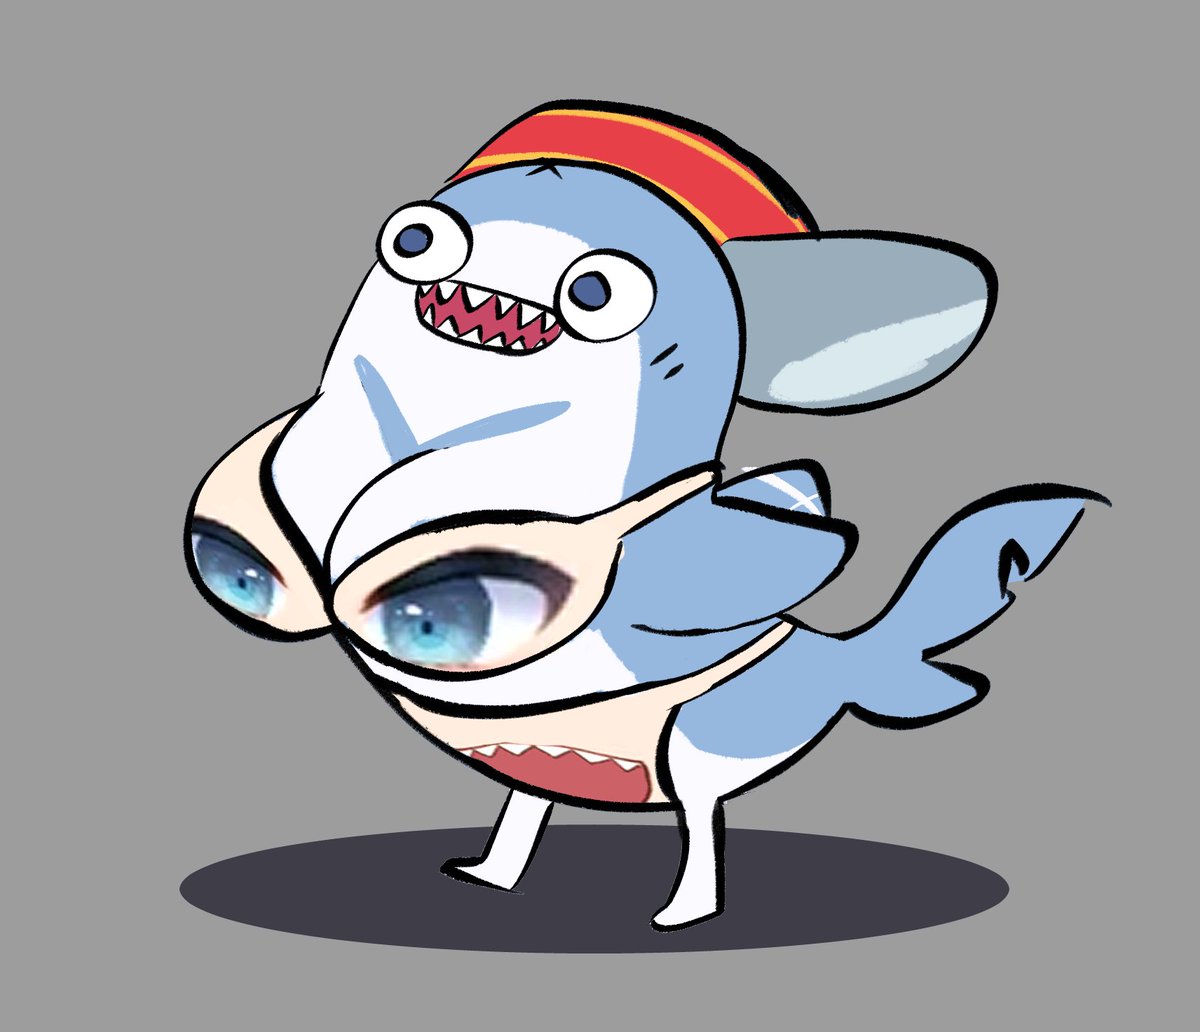 no humans grey background shark teeth sharp teeth blue eyes open mouth  illustration images